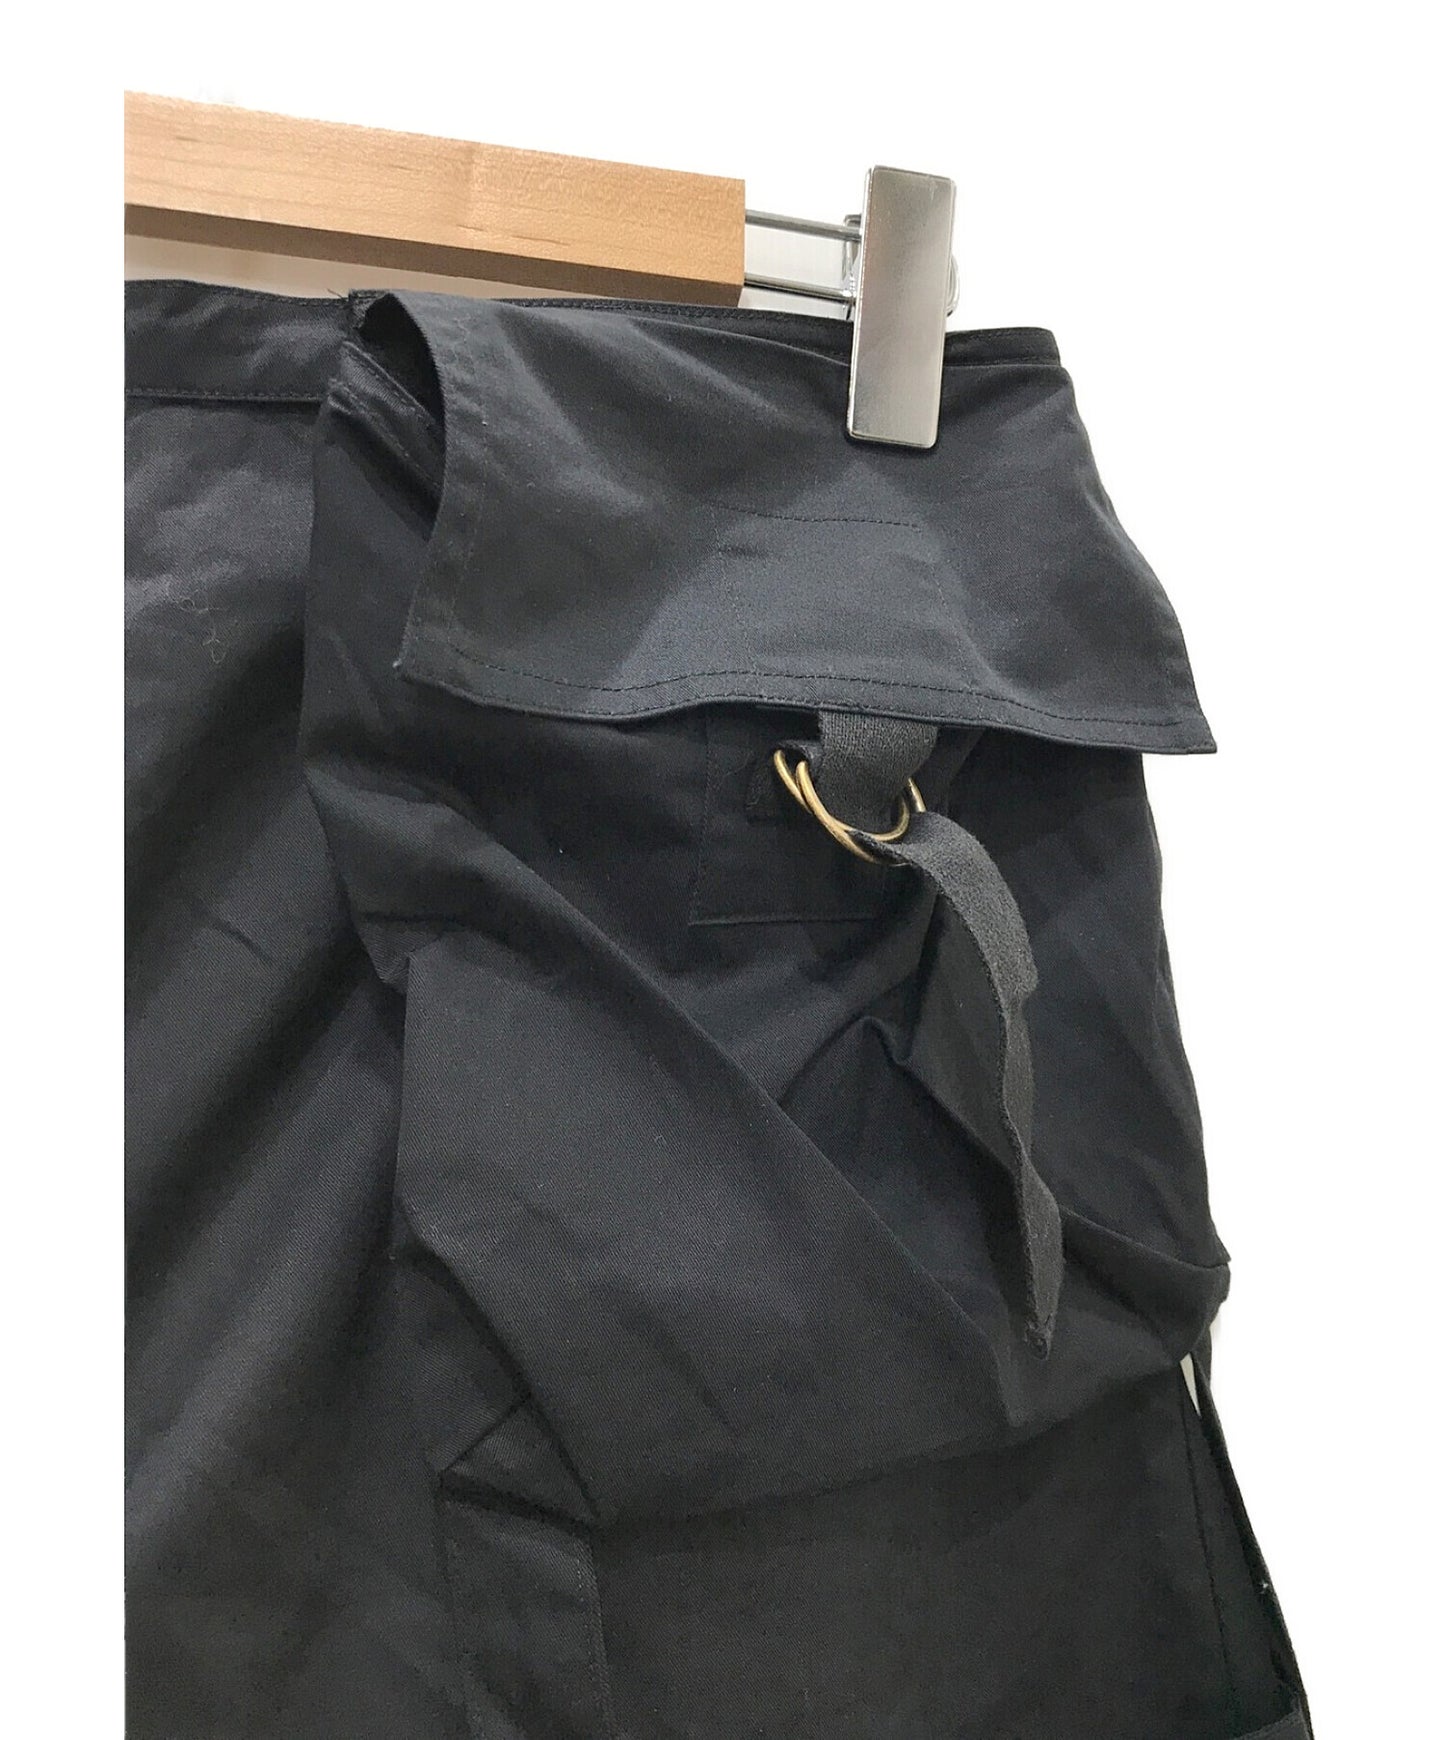 RAF SIMONS Archive Redux 03SS ระยะเวลาผู้บริโภคพิมพ์ซ้ำกางเกง Parachute Pants ระยะเวลาของผู้บริโภคพิมพ์ซ้ำ